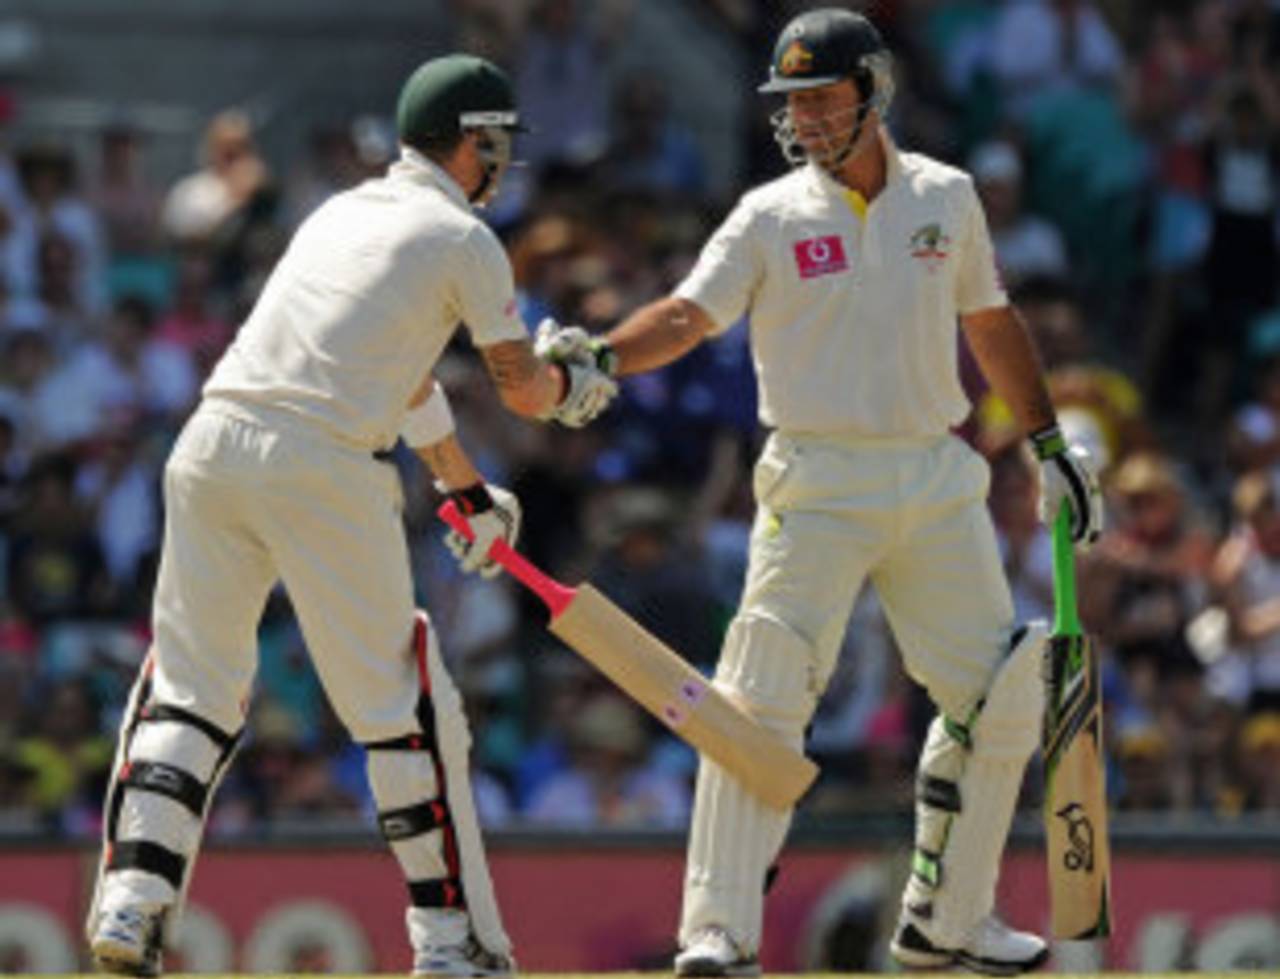 Ricky Ponting congratulates Michael Clarke on reaching his half-century, Australia v India, 2nd Test, Sydney, 2nd day, January 4, 2012